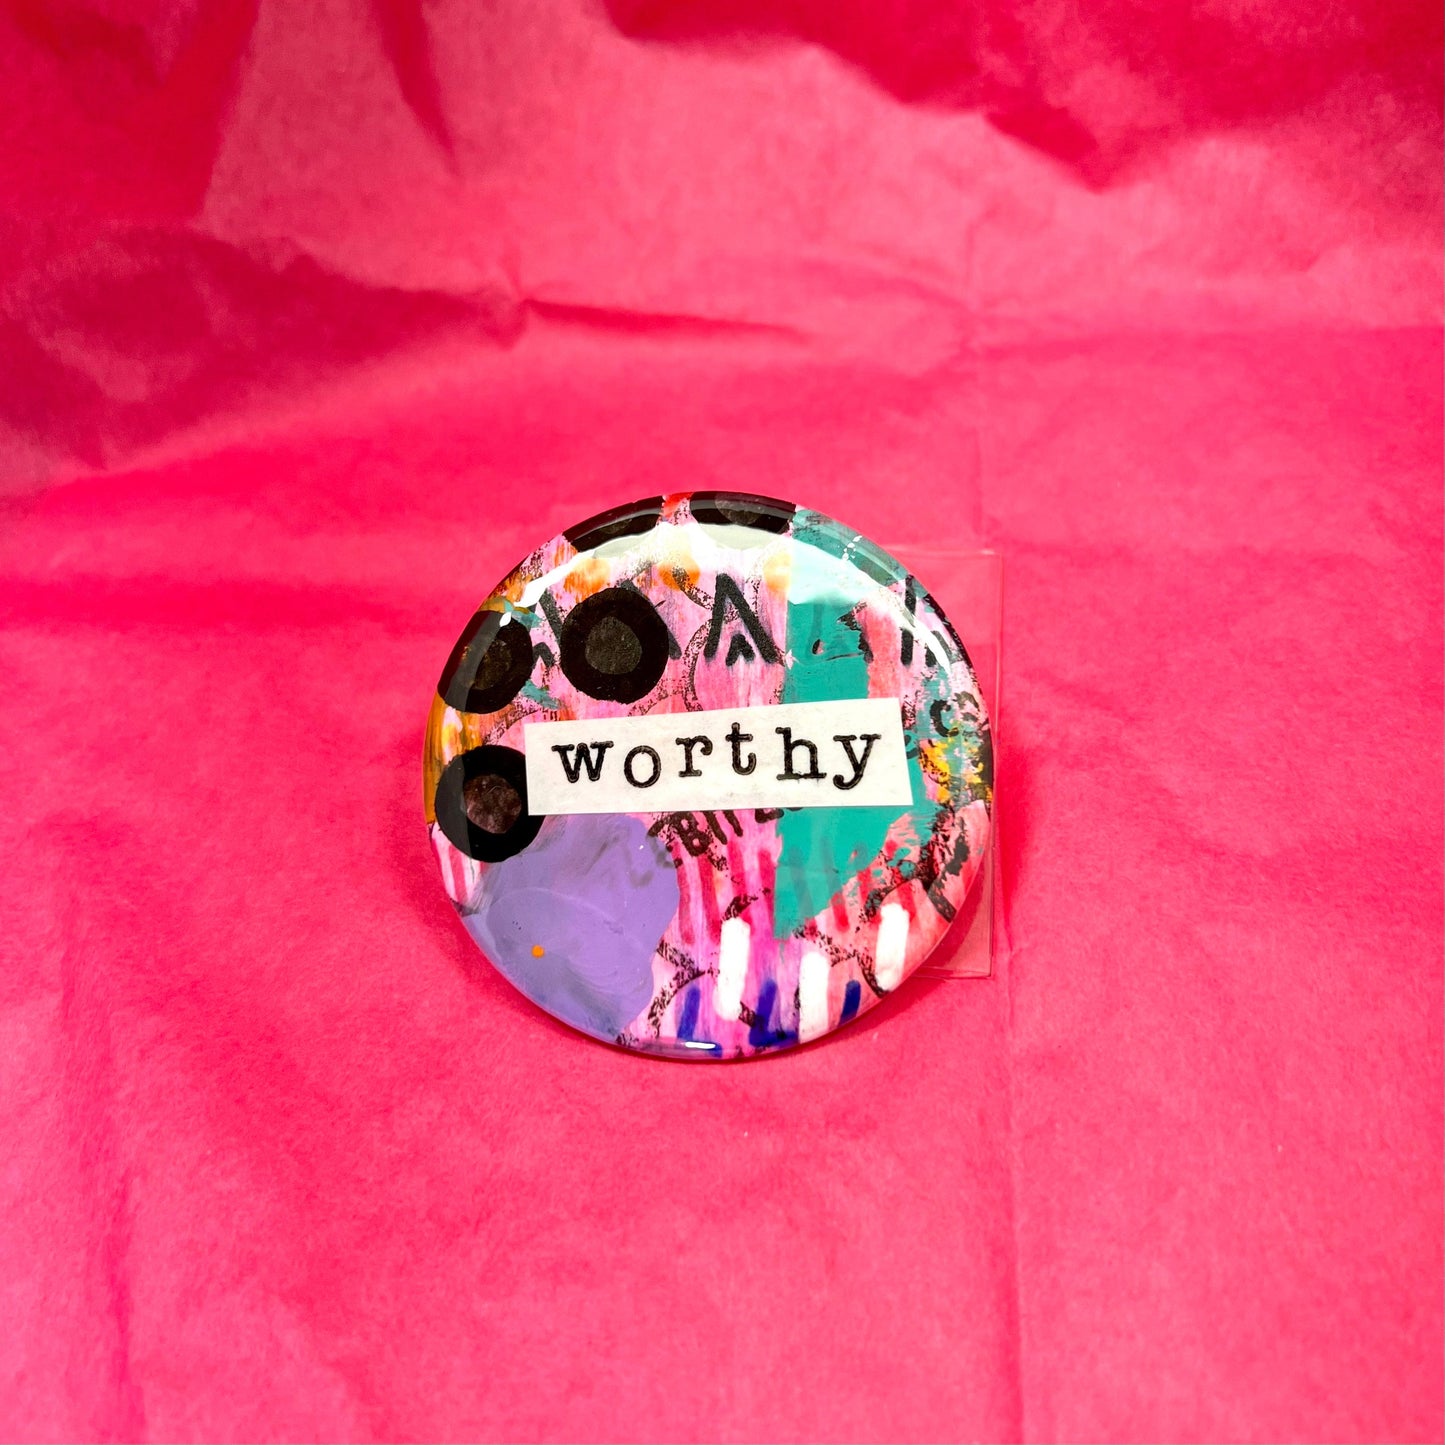 “worthy” large art pin / magnet